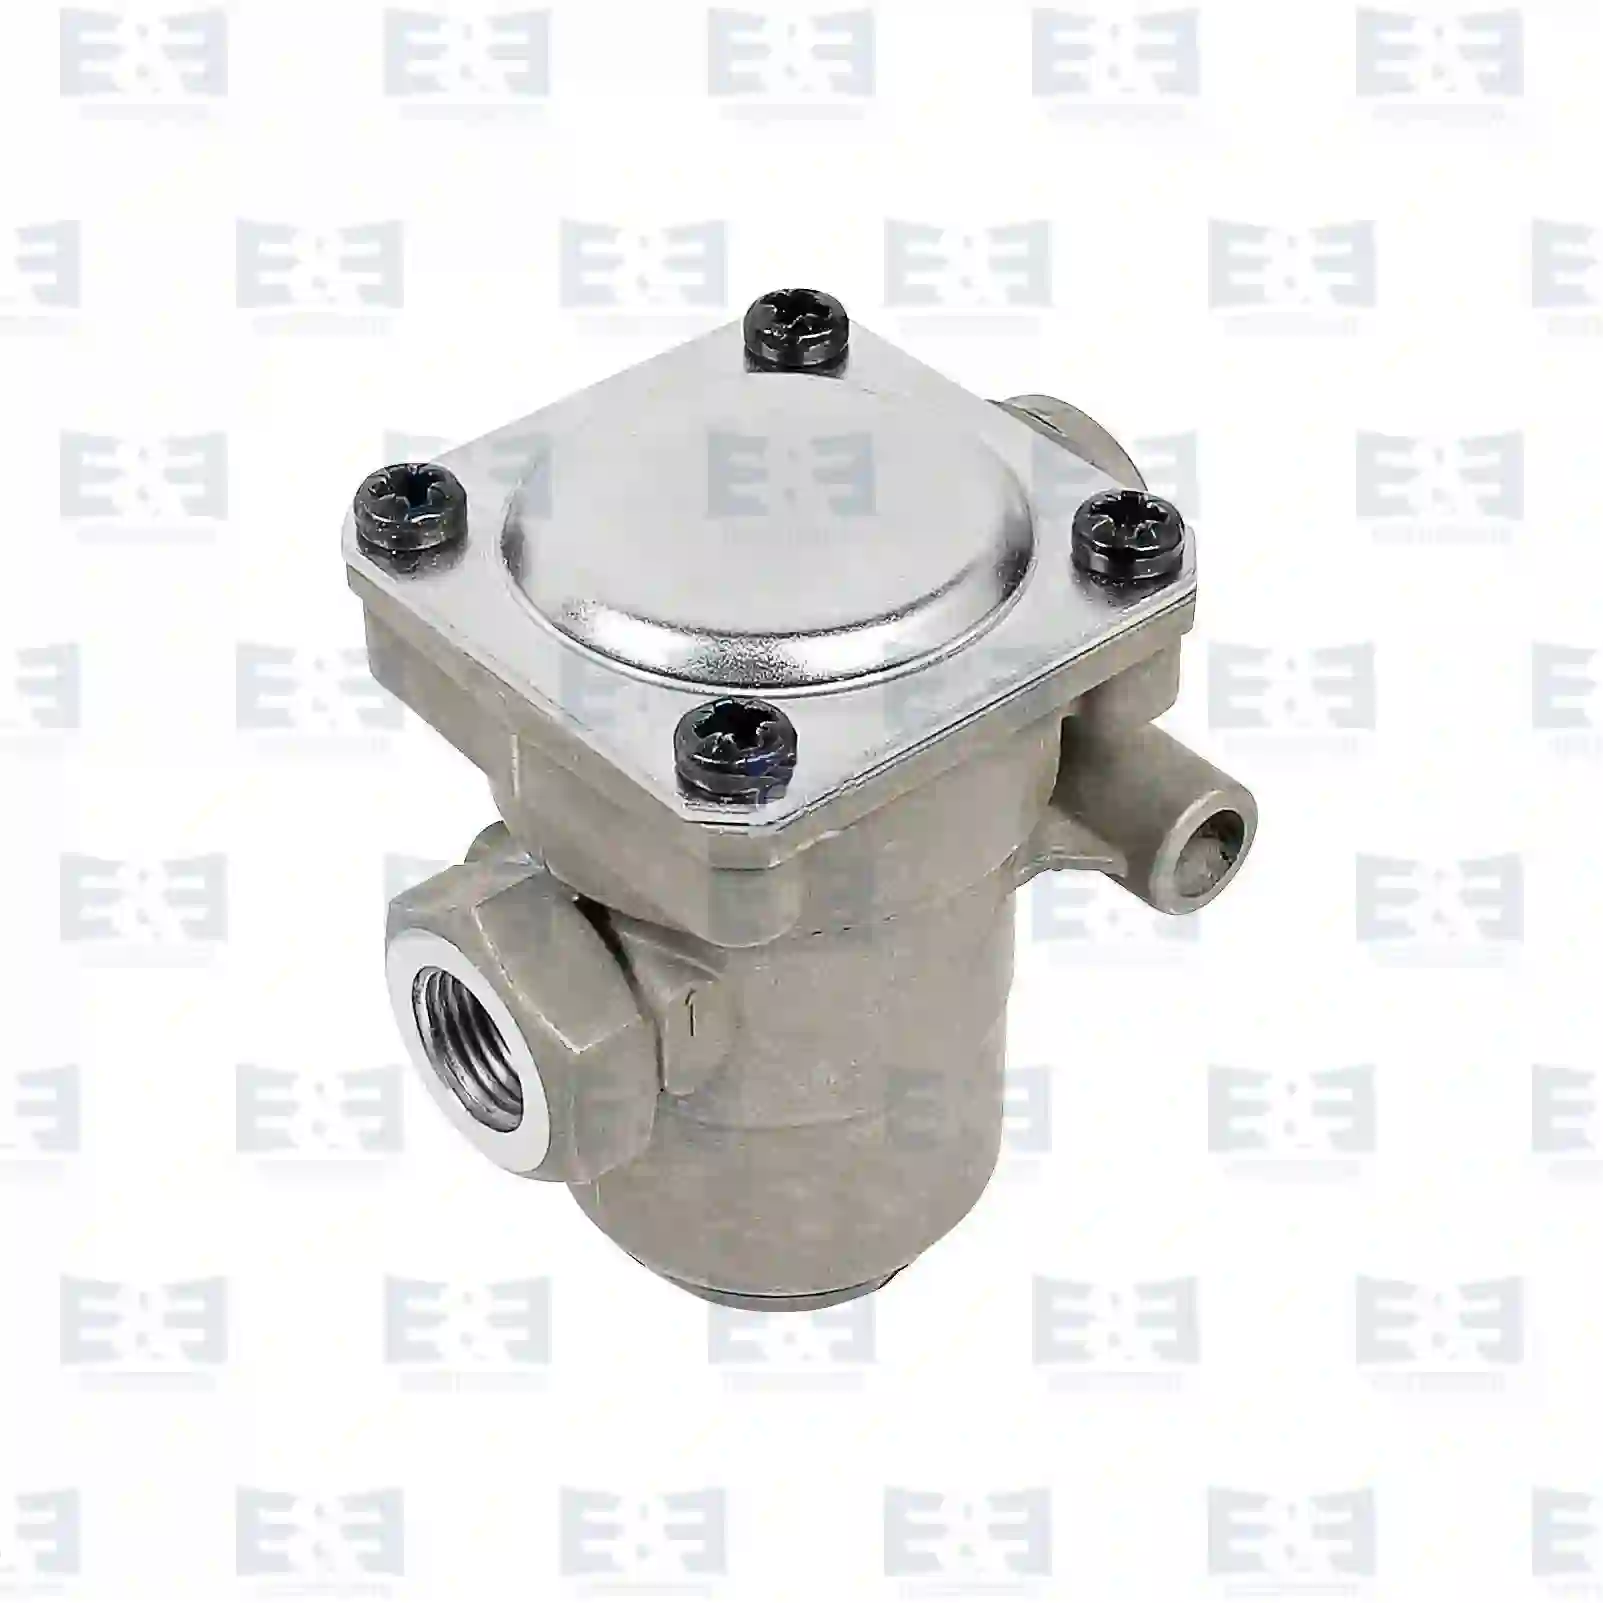 Axle Lift Pressure limiting valve, EE No 2E2281354 ,  oem no:1629183, , , E&E Truck Spare Parts | Truck Spare Parts, Auotomotive Spare Parts